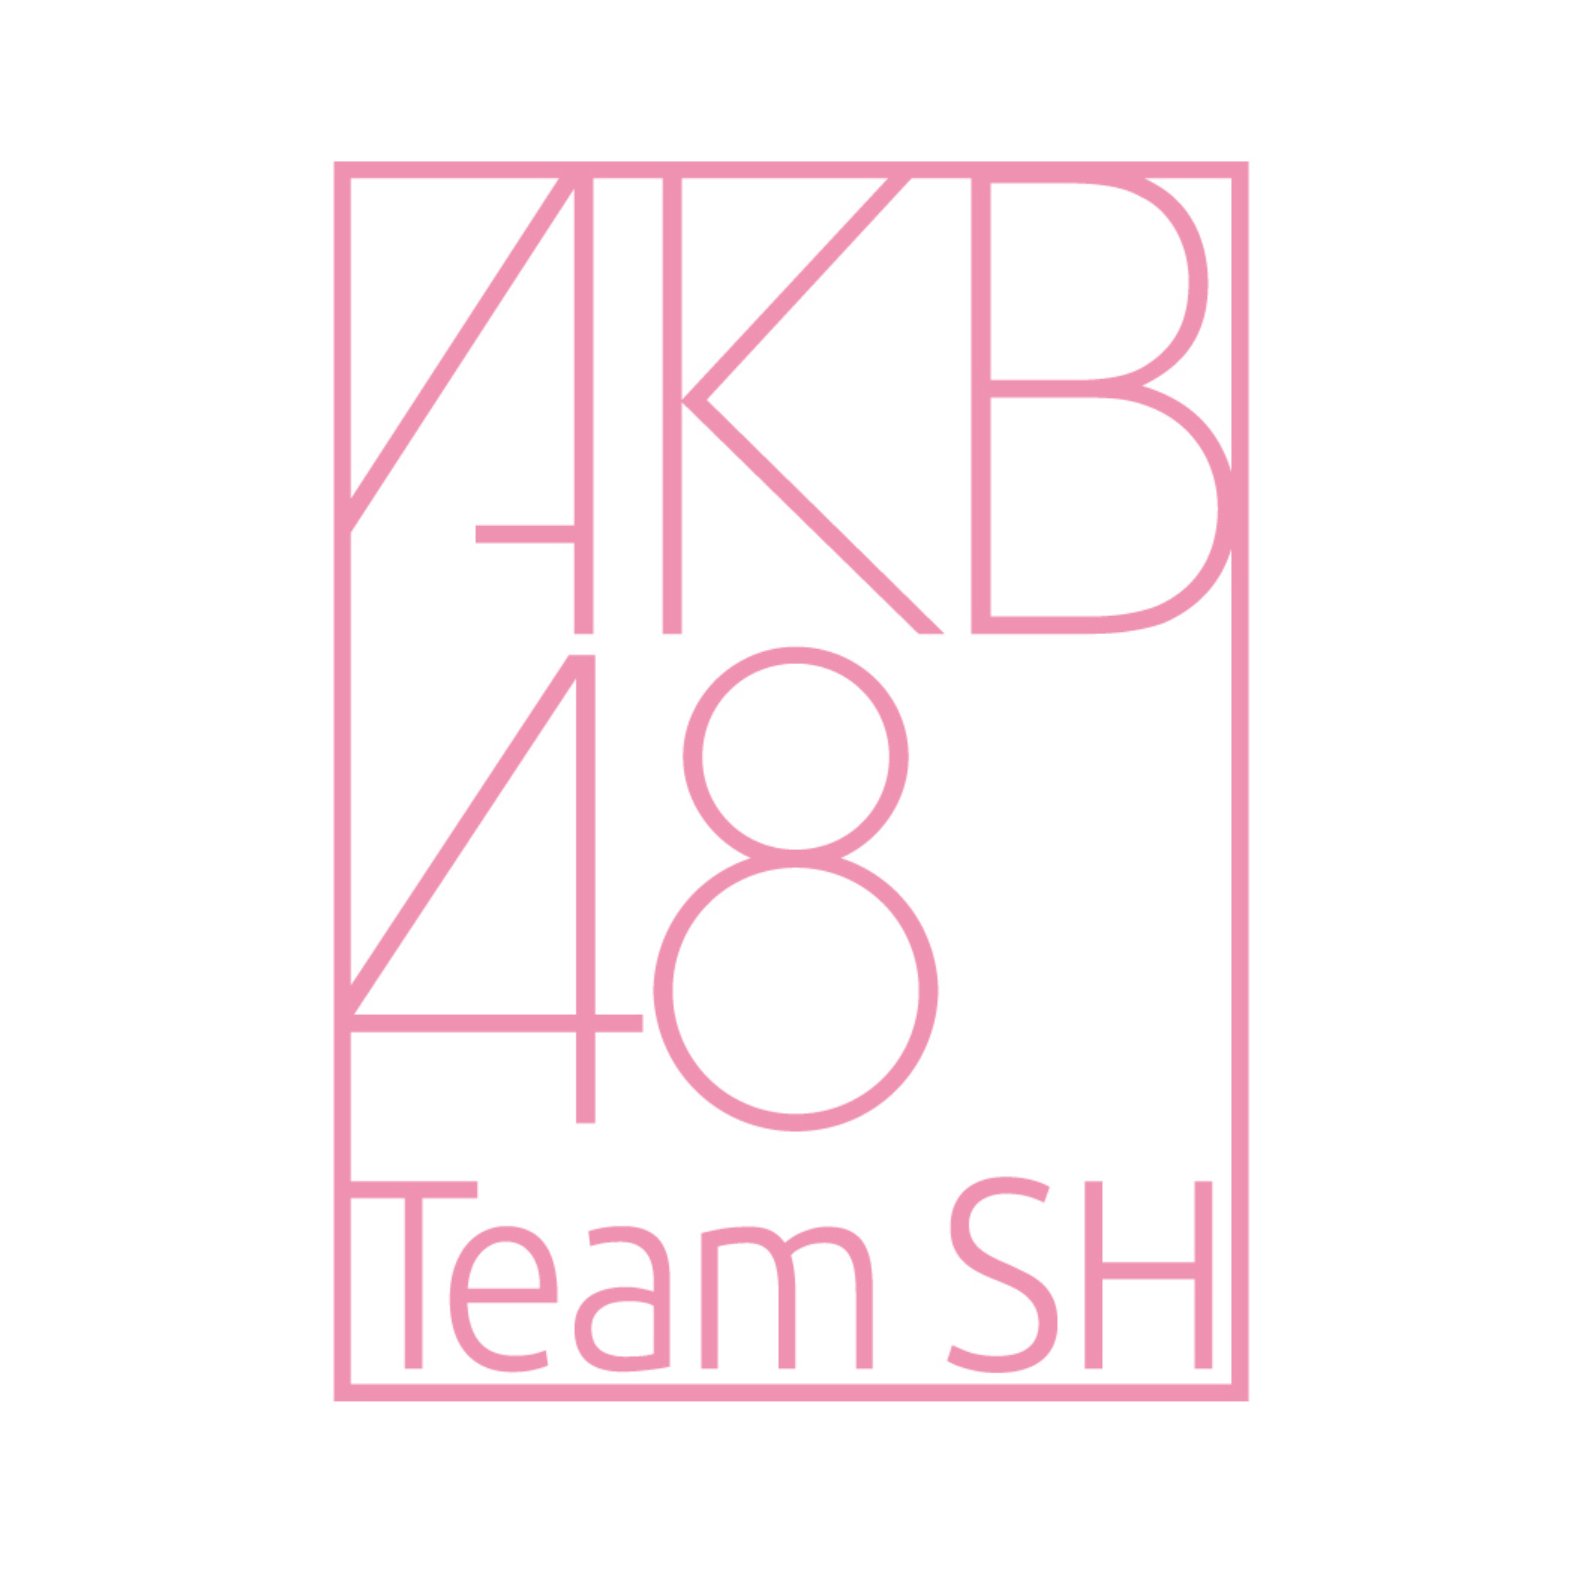 AKB48 Group中国内地官方姐妹团AKB48 Team SH